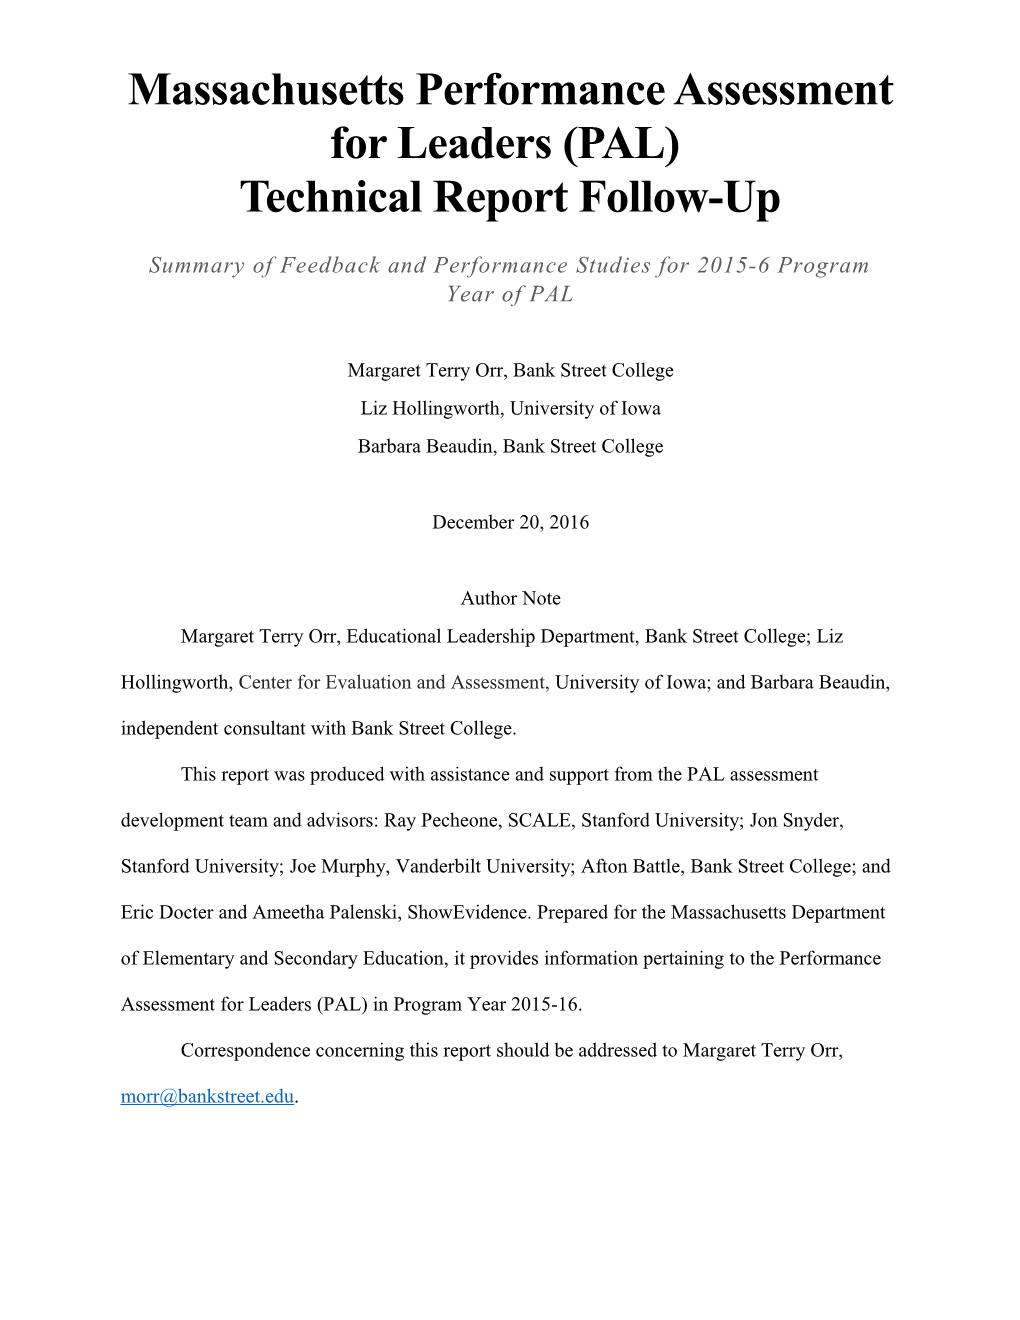 Massachusetts Performance Assessment for Leaders (PAL) Technical Report Follow-Up 2015-2016